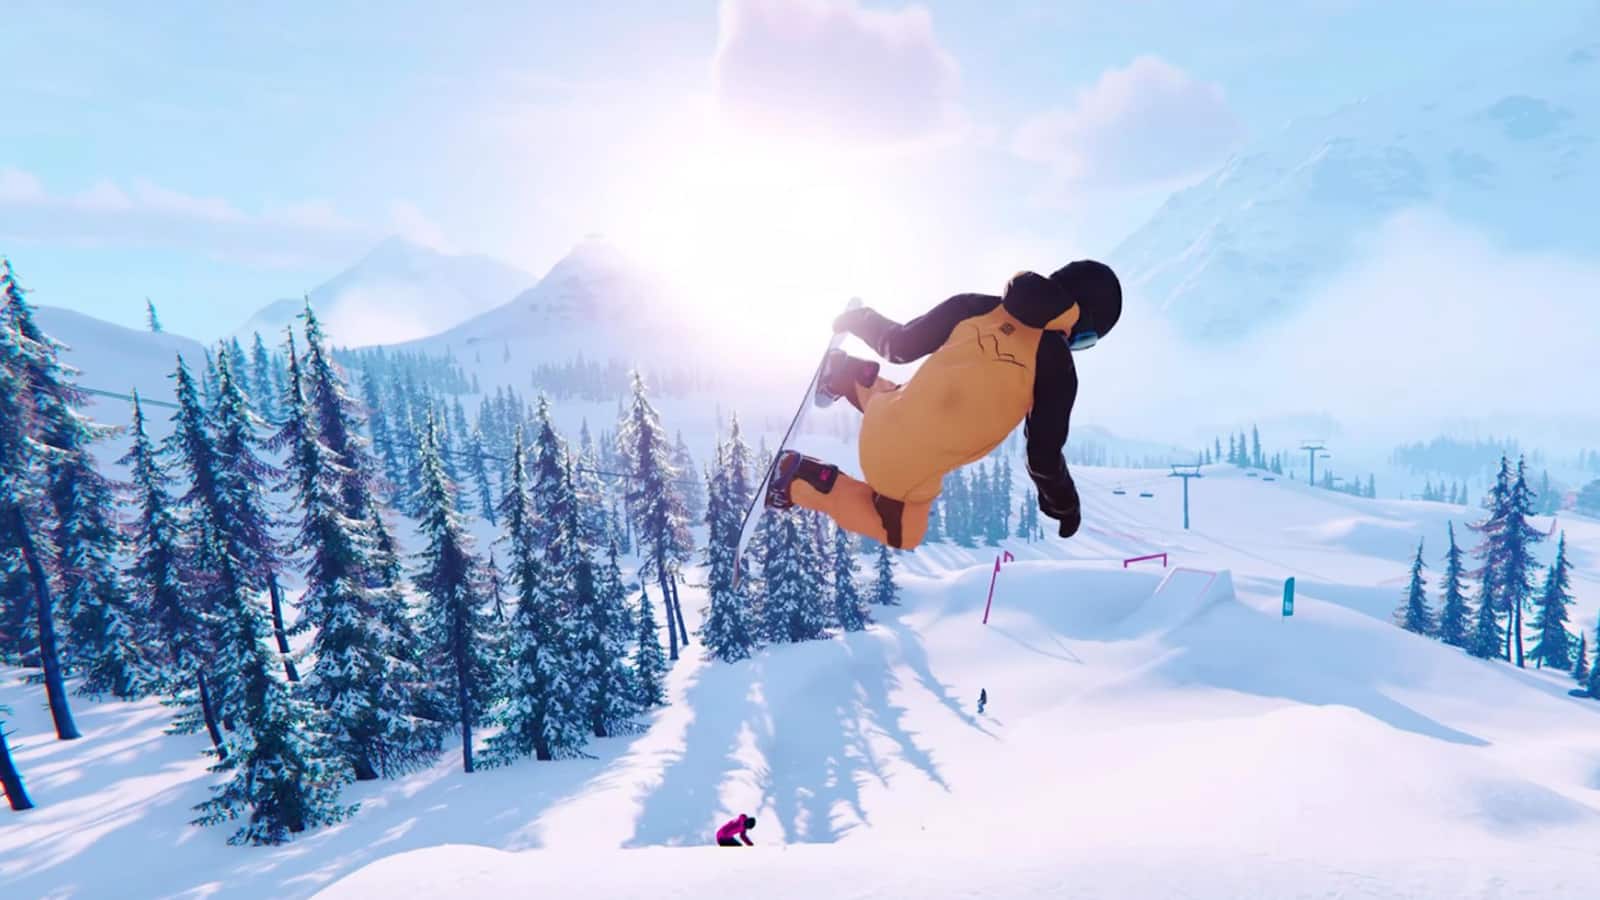 Shredders Kotaku Review: The Skate Of The Snowboarding Genre